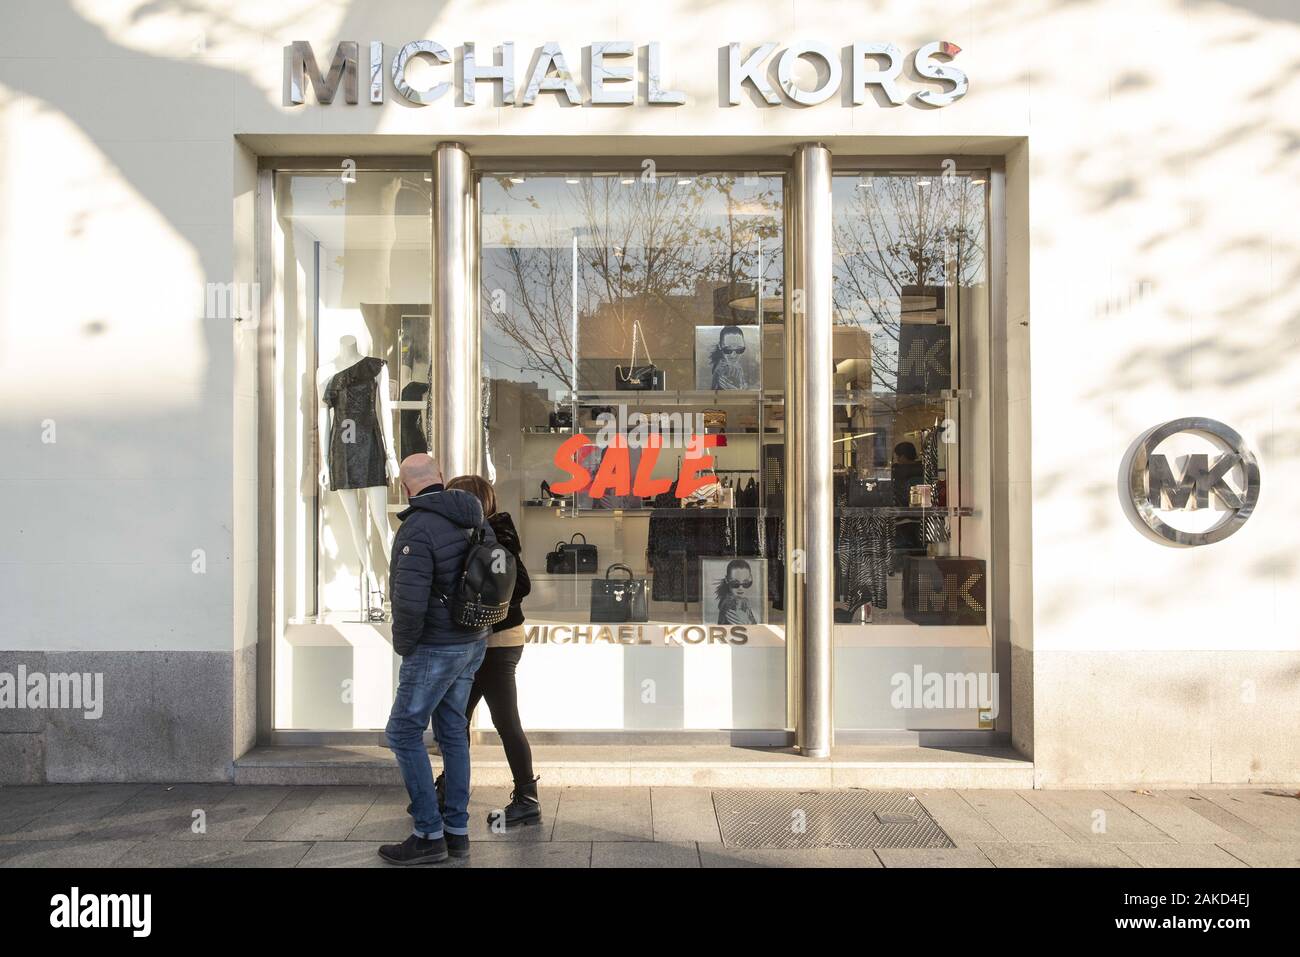 652 Michael Kors Fashion Store Stock Photos - Free & Royalty-Free